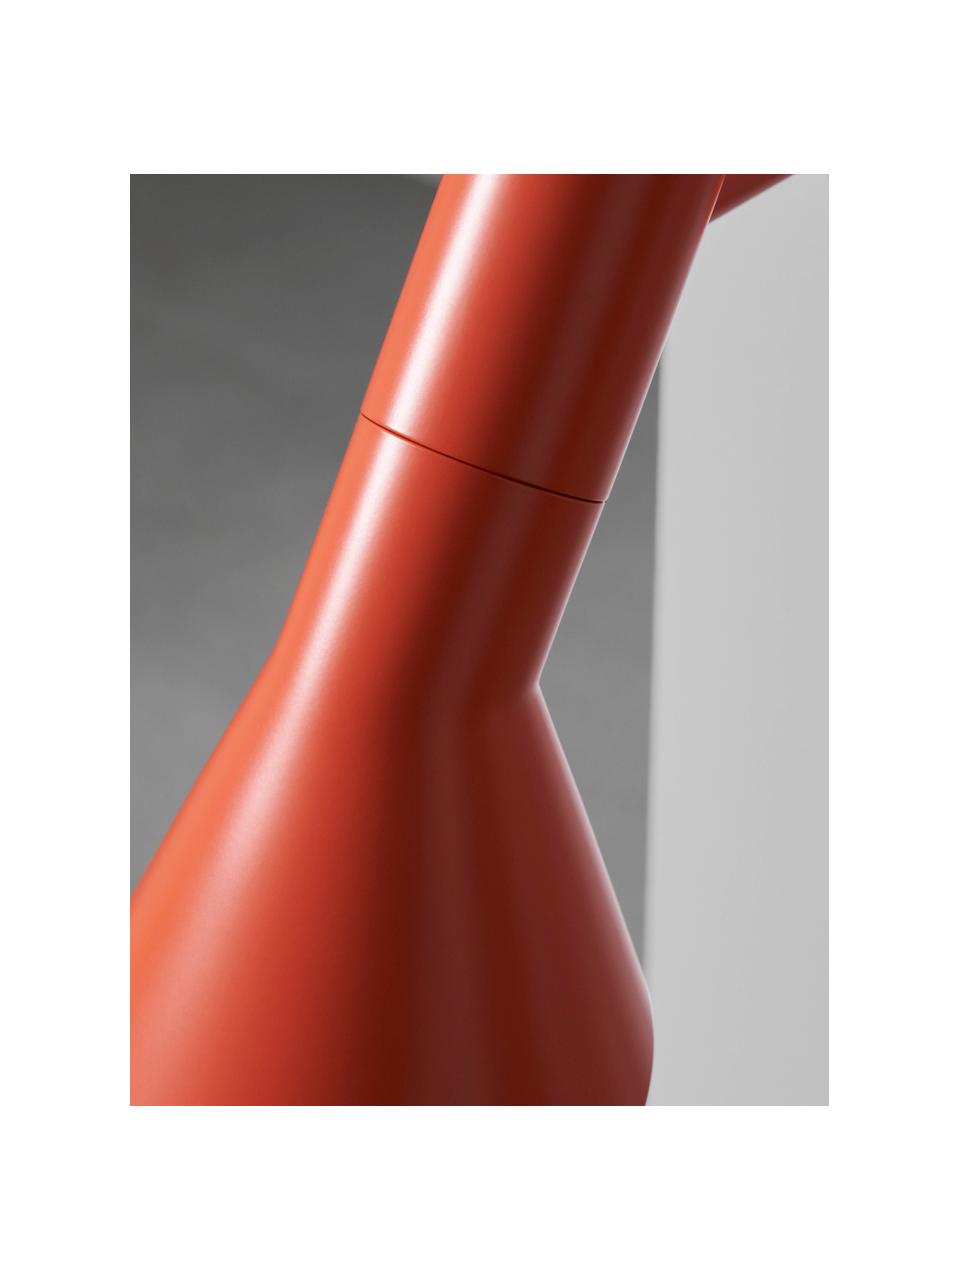 Wandlamp AJ met stekker, Lamp: gecoat staal, Oranje, Ø 32 x H 18 cm